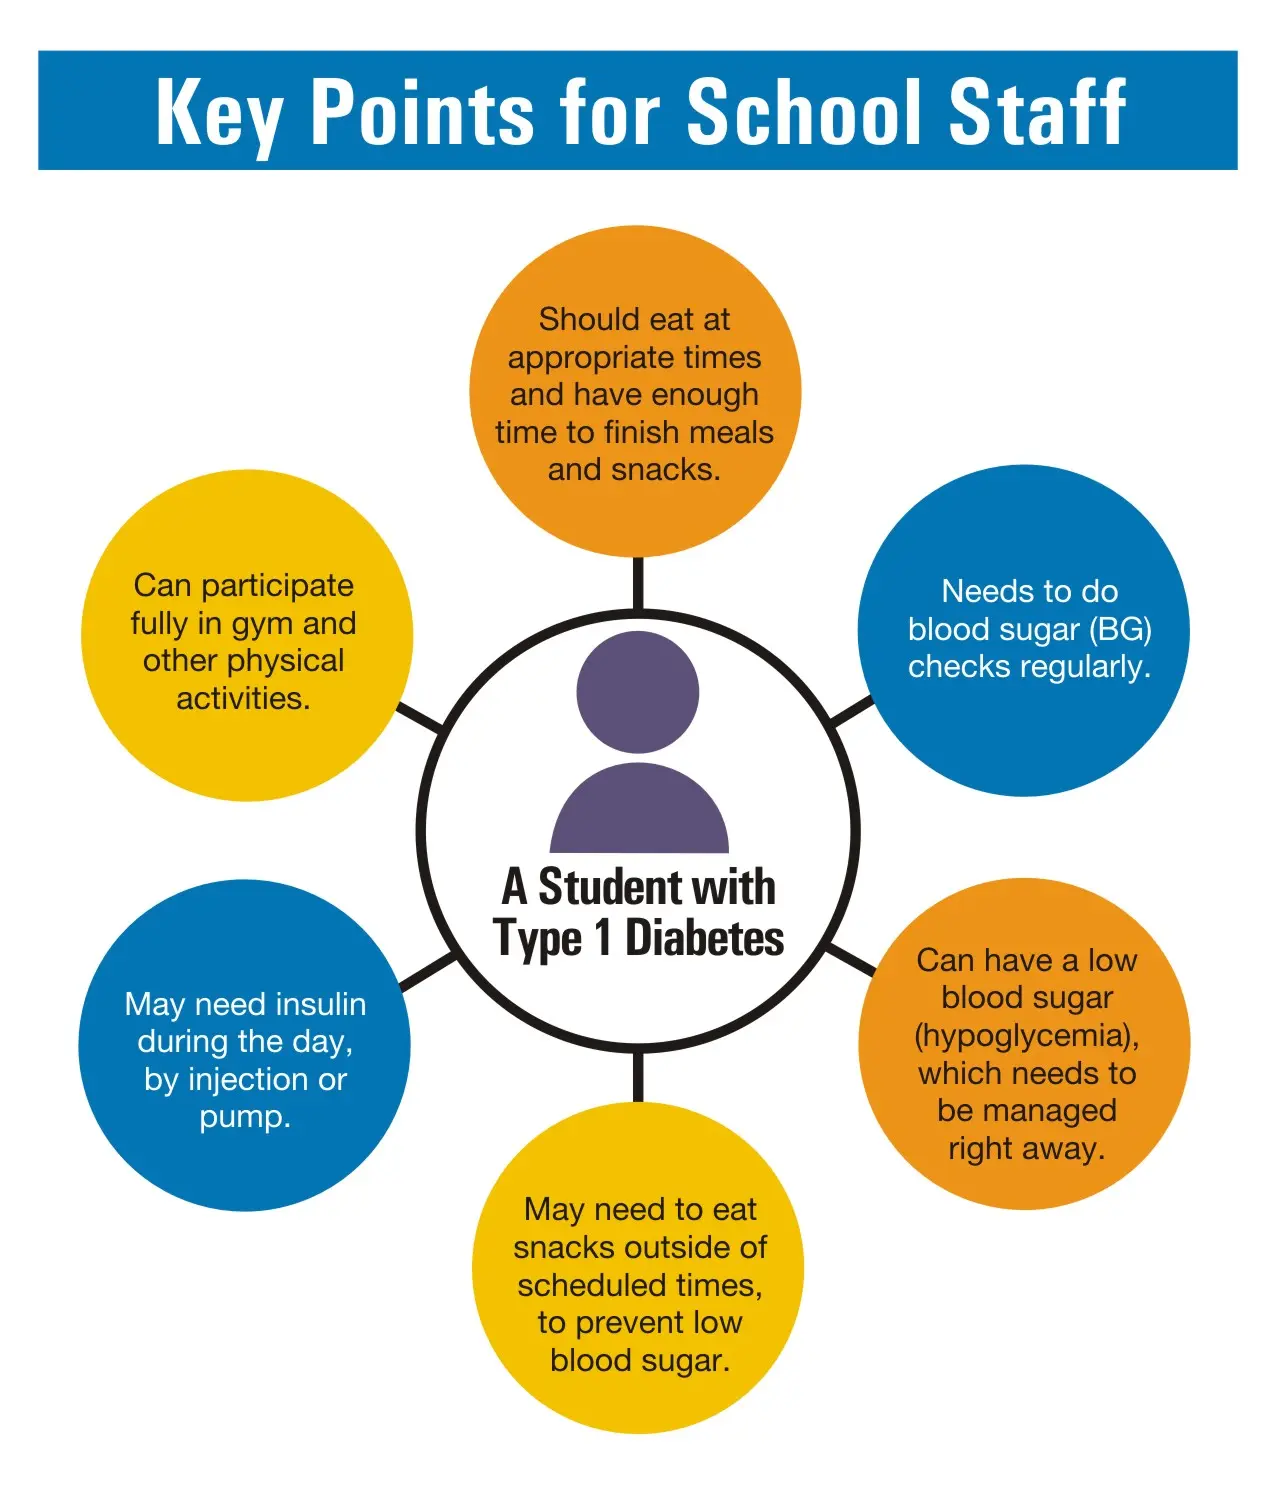 Key points for school staff